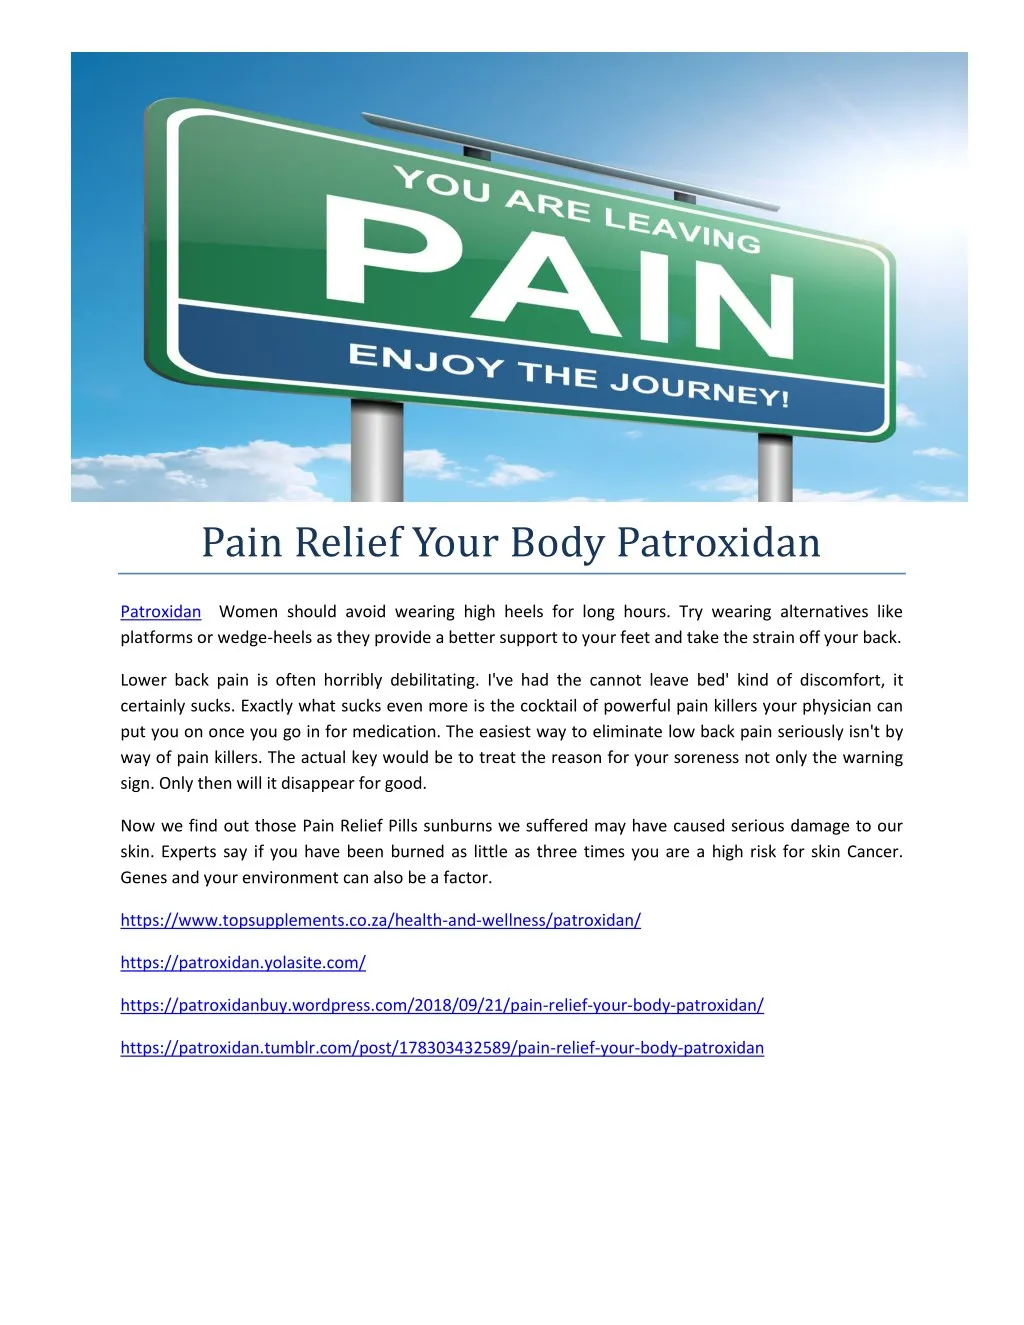 pain relief your body patroxidan